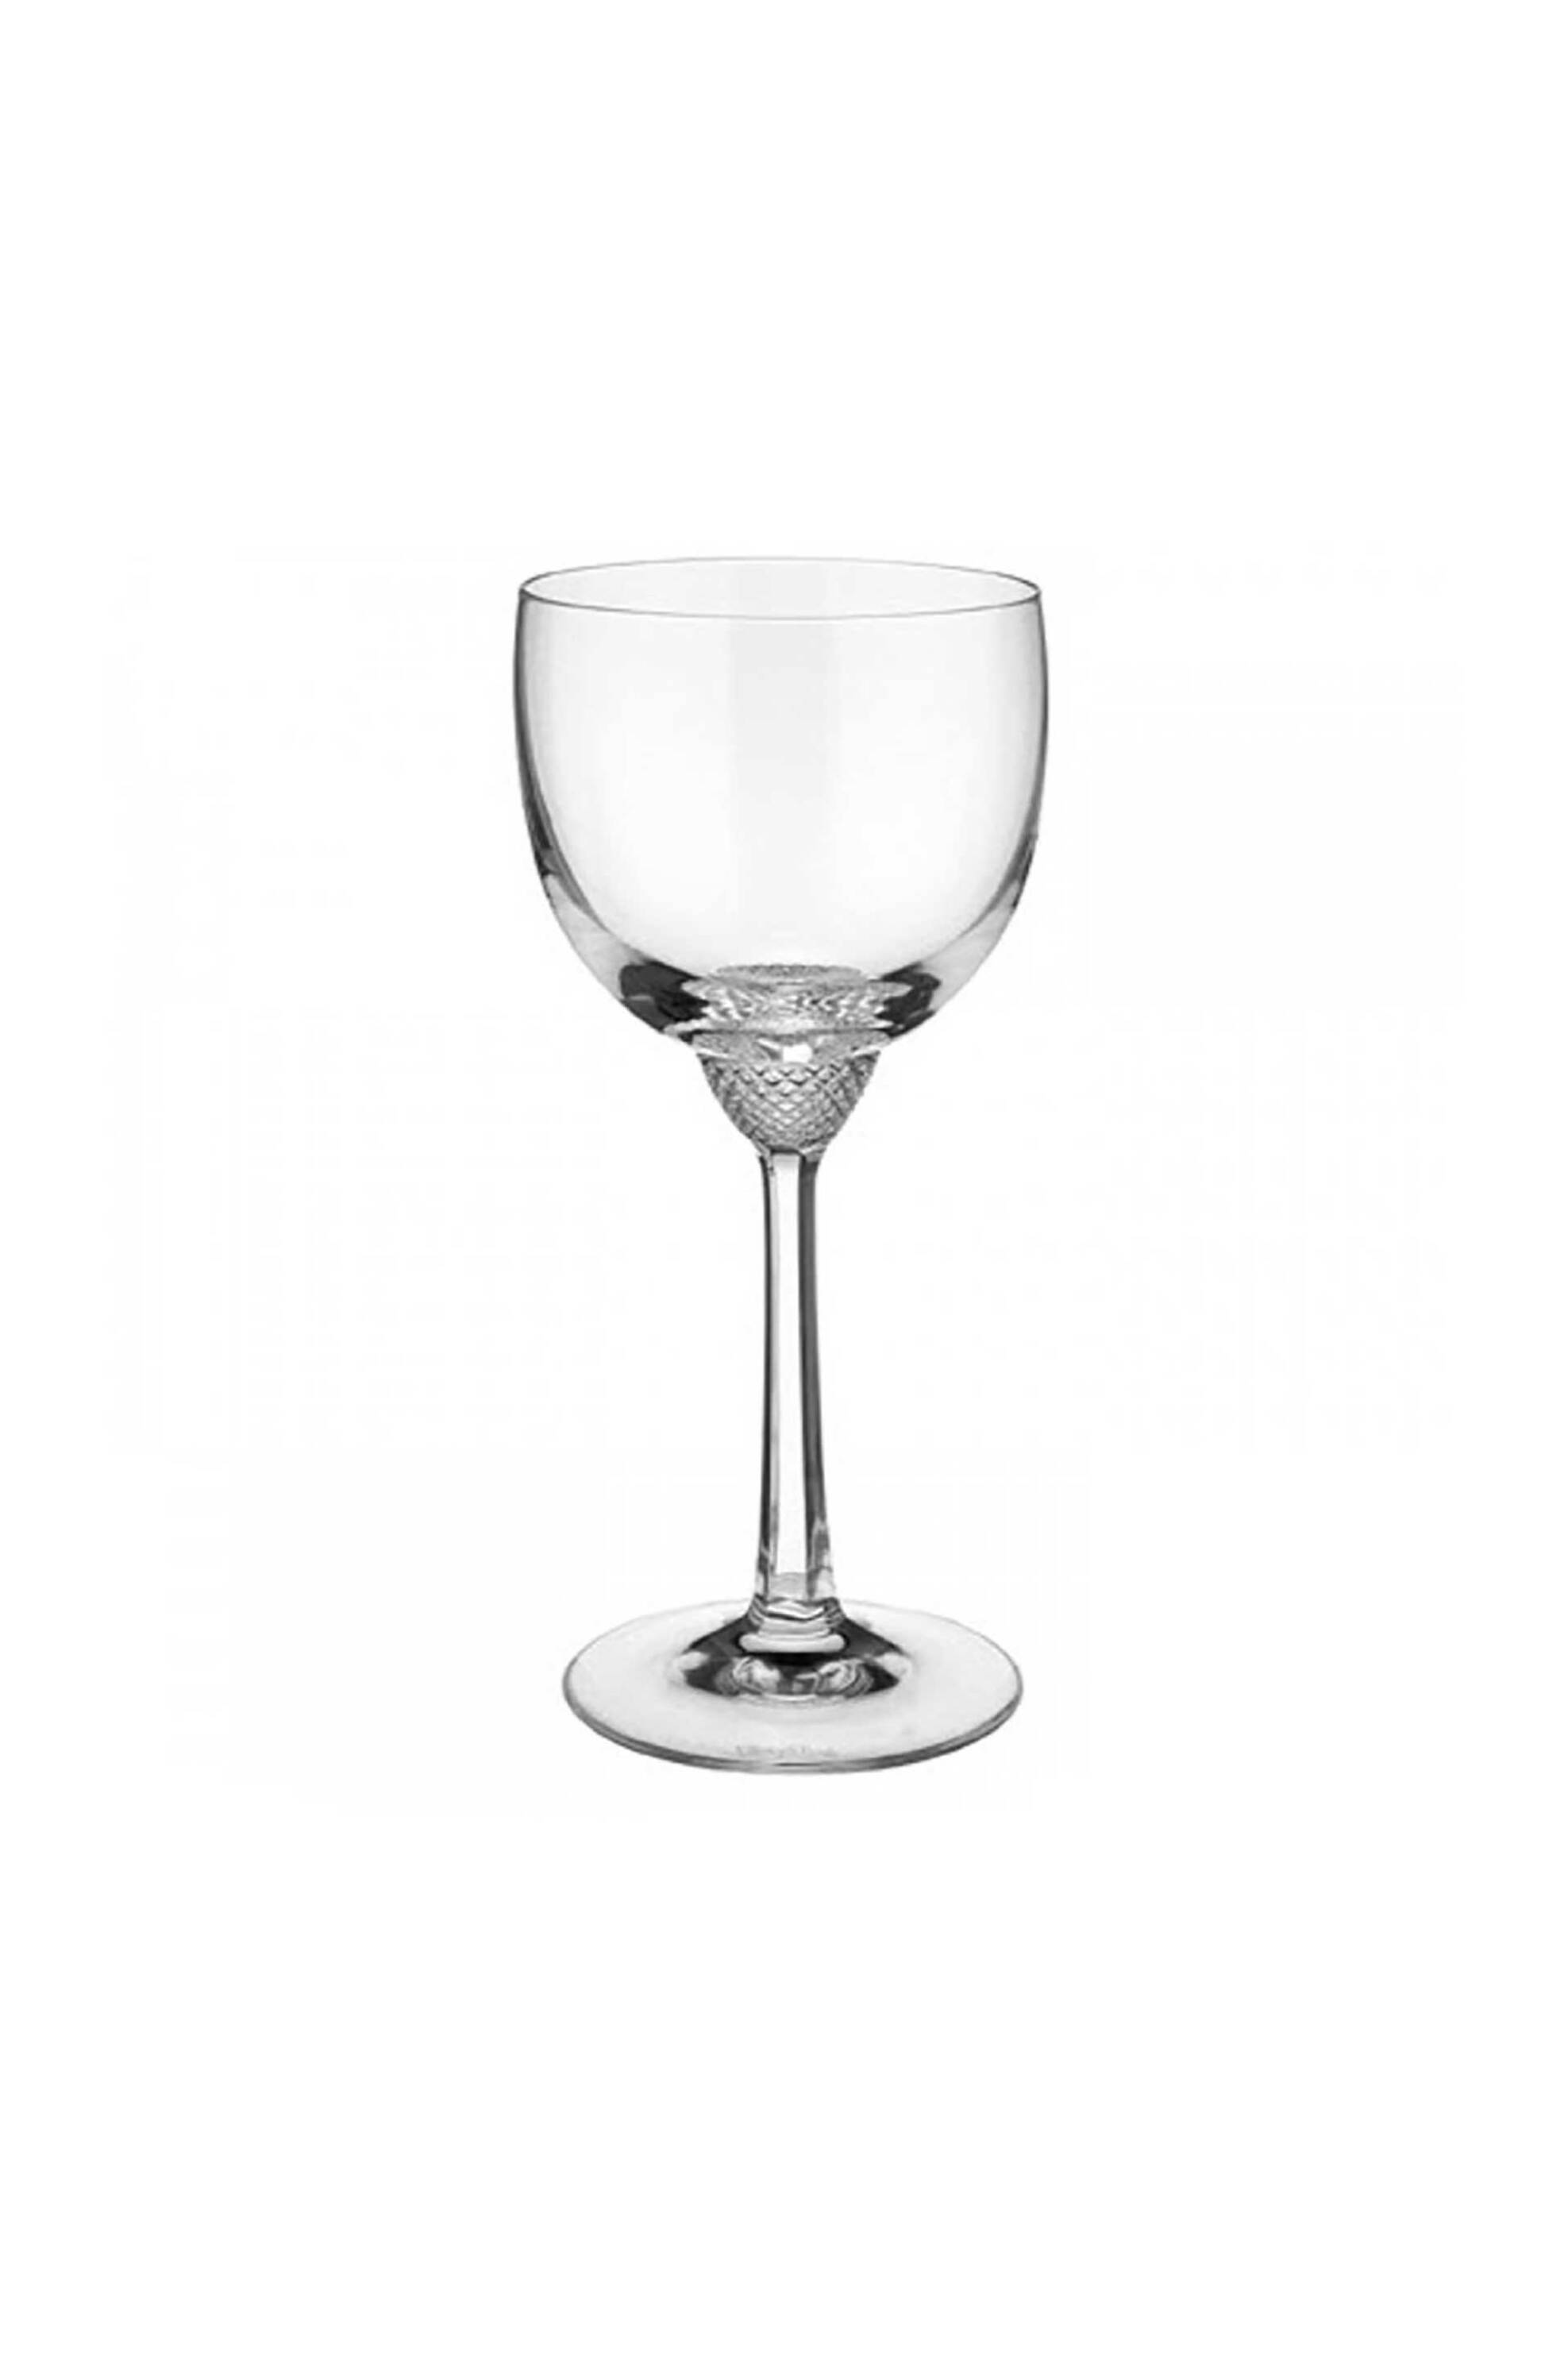 Home > ΚΟΥΖΙΝΑ > Υαλικά > Ποτήρια Villeroy & Boch κρυστάλλινο ποτήρι κρασιού "Octavie" 230 ml - 7390-0030